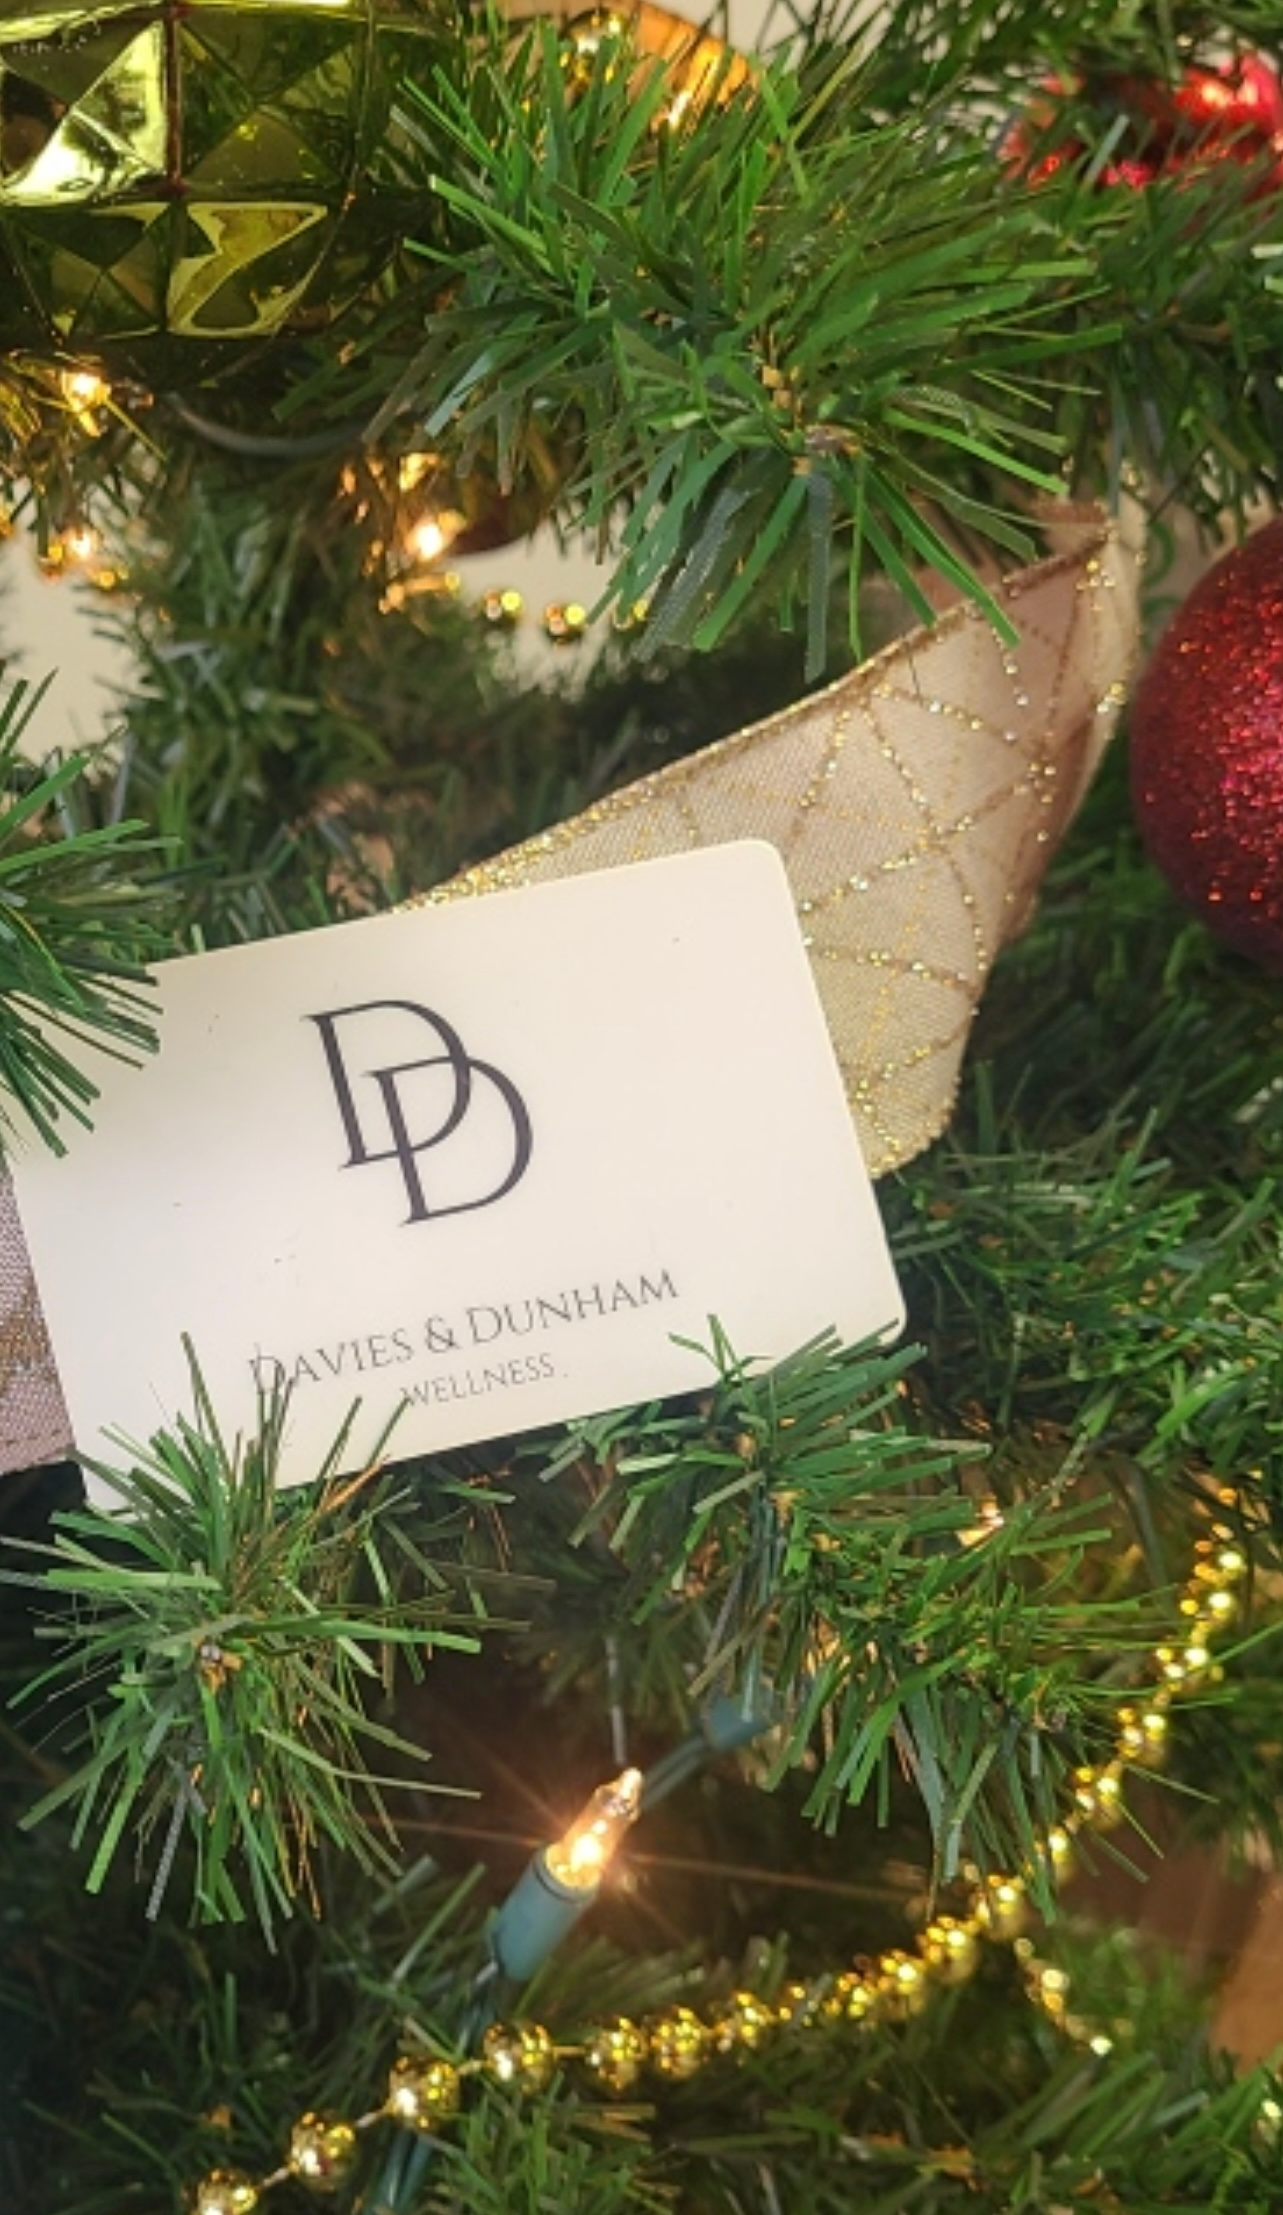 Davies & Dunham Digital Gift Card